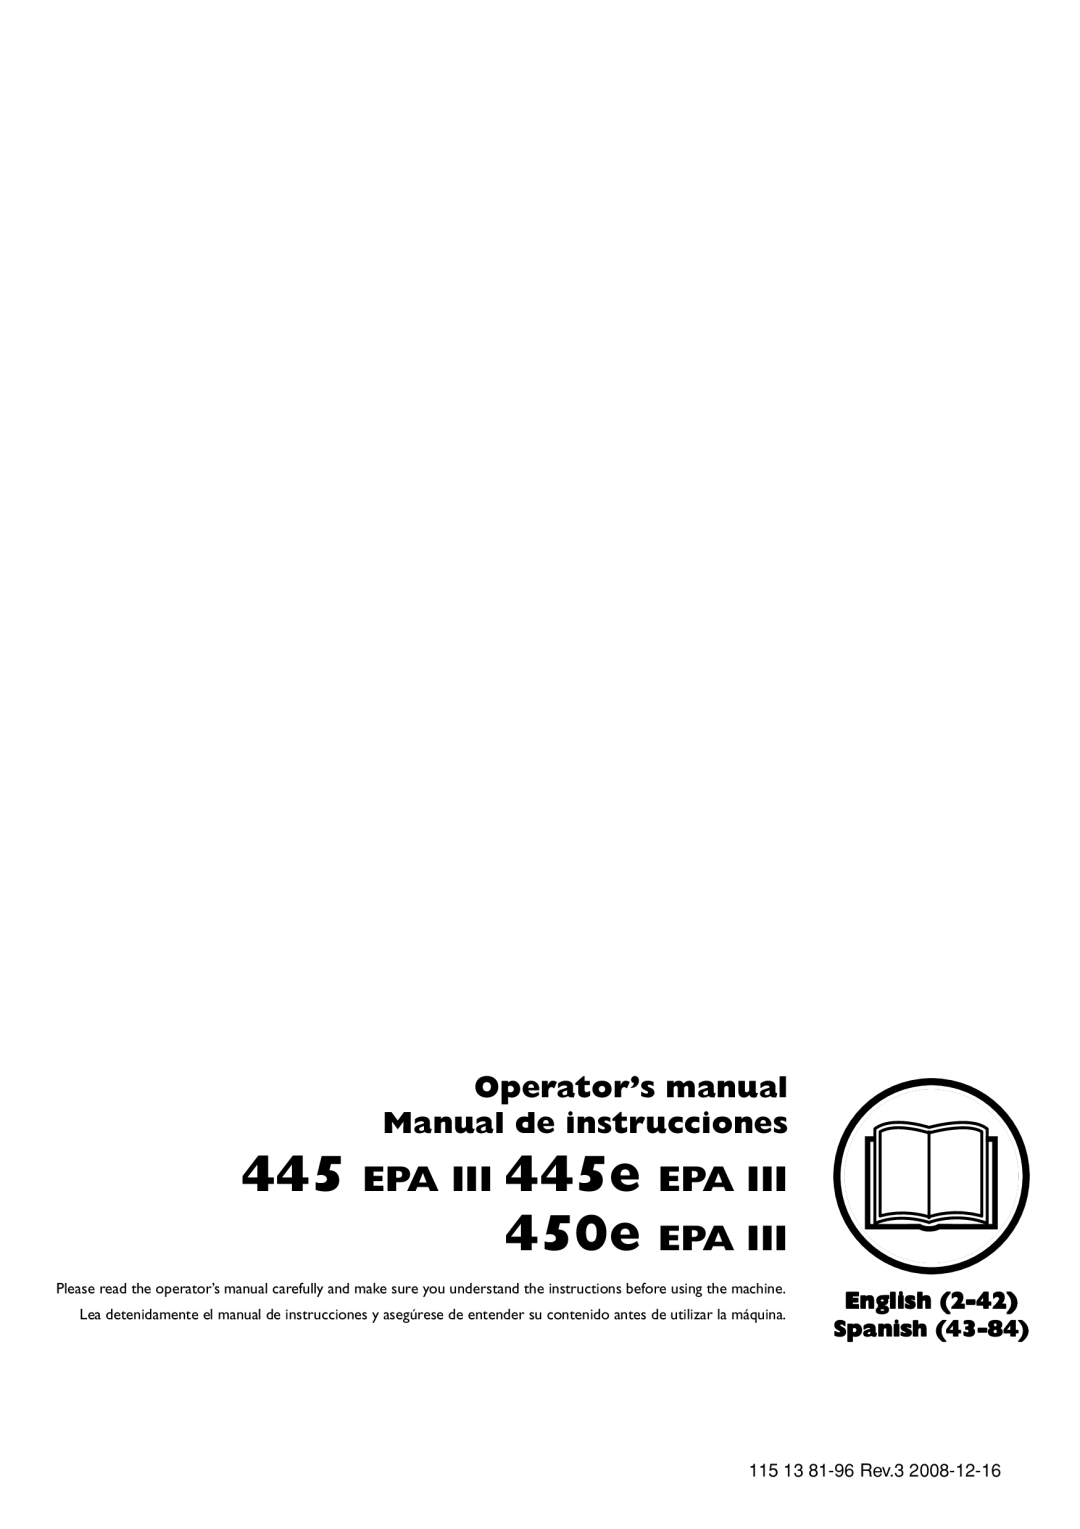 Husqvarna 445 EPA III manual EPA III 445e EPA 450e EPA, Operator’s manual Manual de instrucciones, English Spanish 